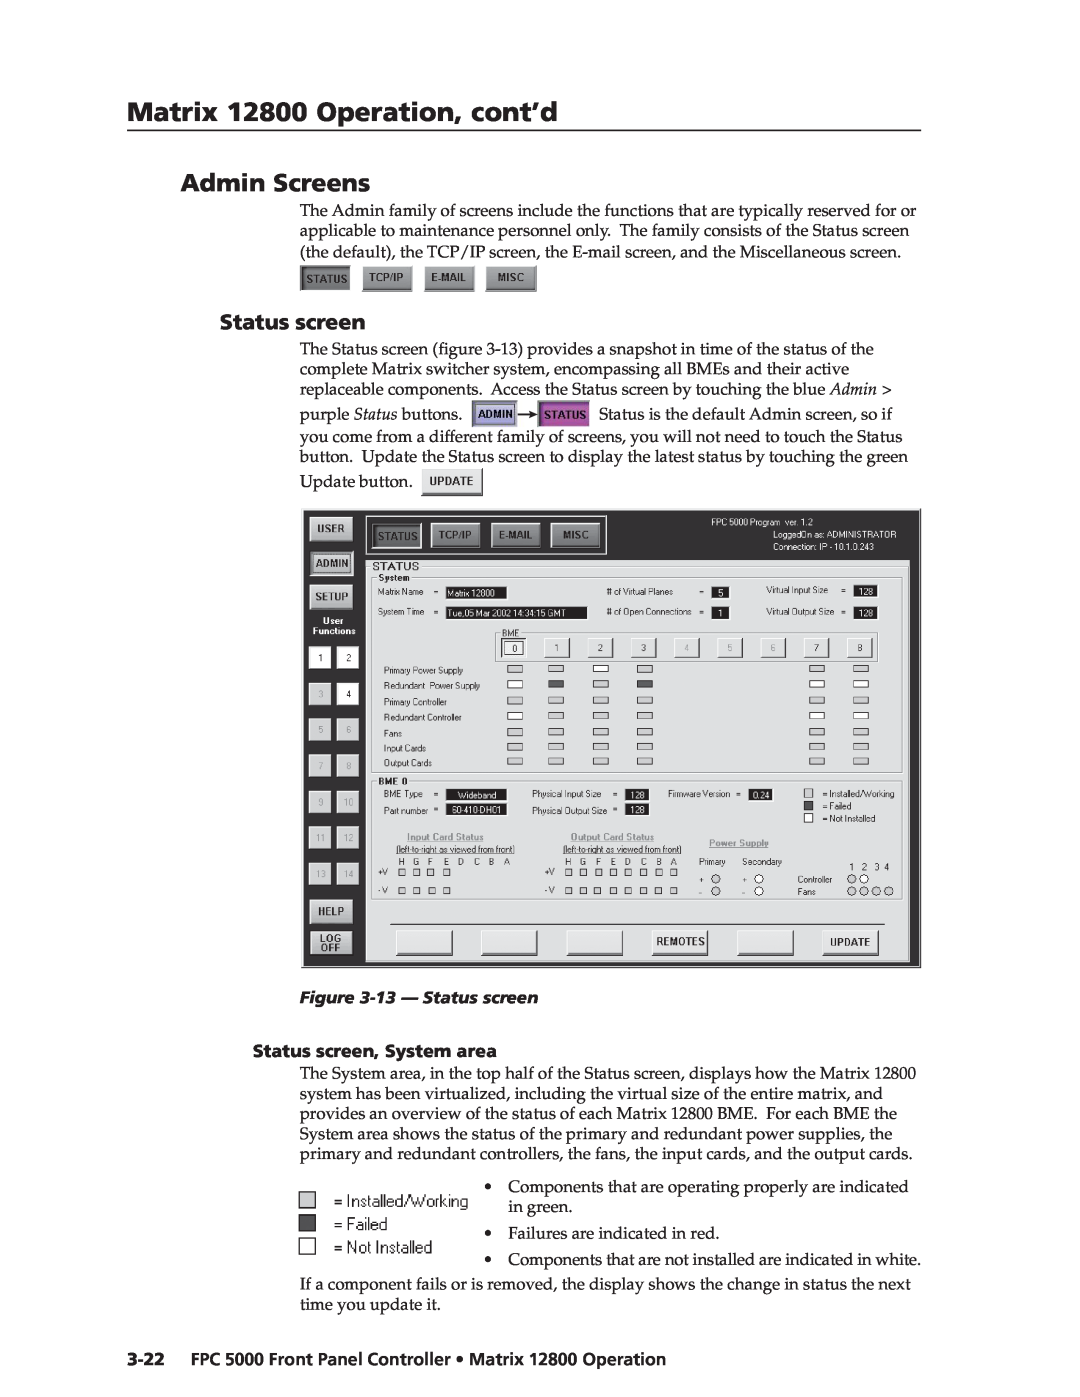 Extron electronic FPC 5000 manual Admin Screens, 13 - Status screen, Status screen, System area 